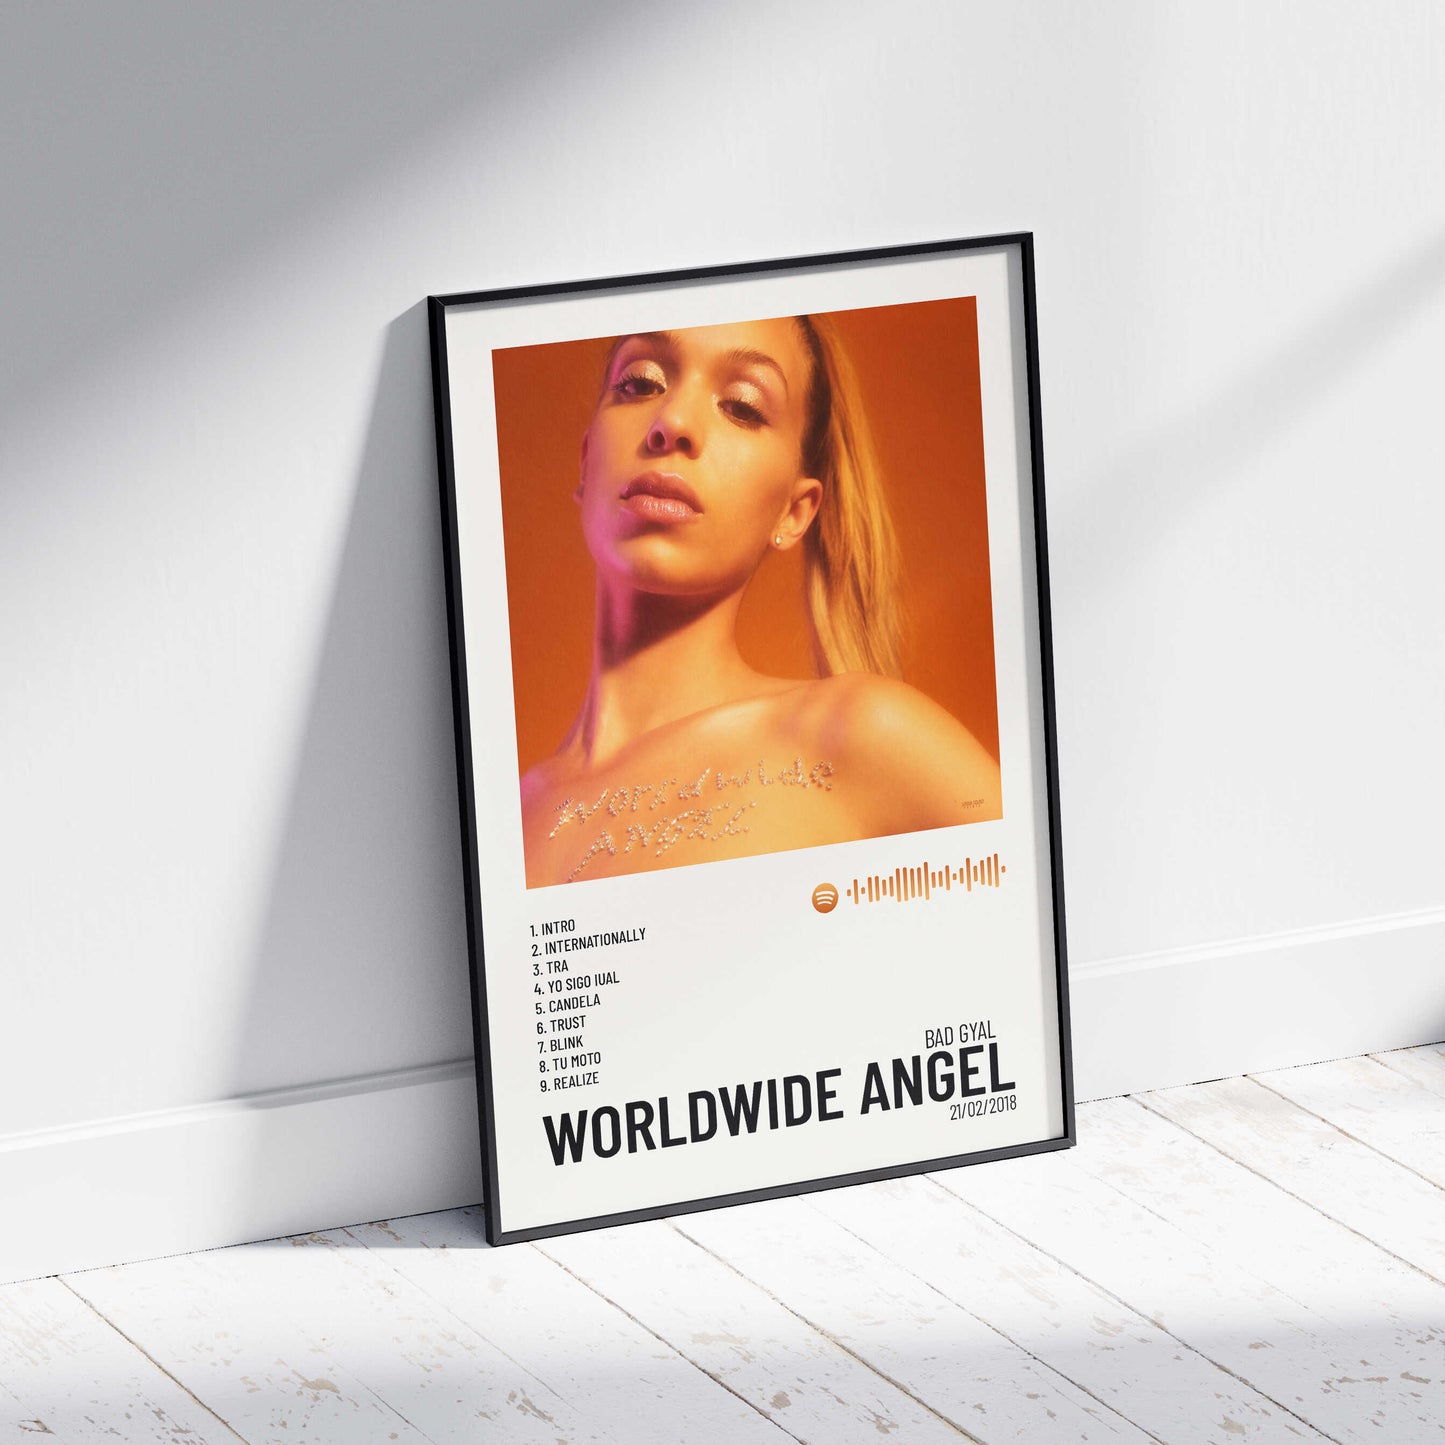 Worldwide Angel